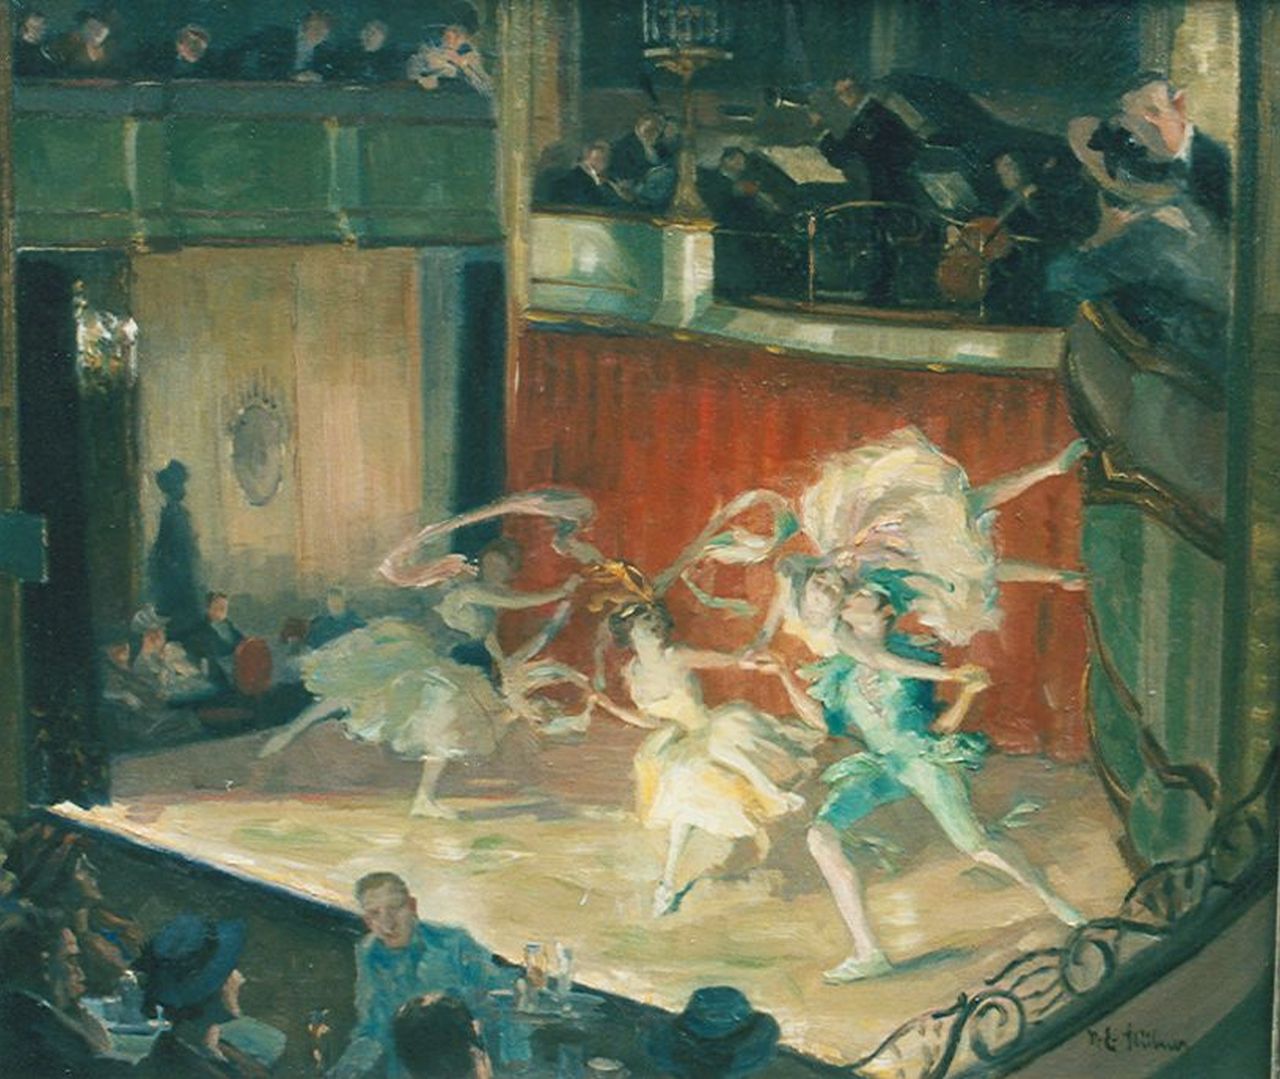 Stübner R.E.  | Robert Emil Stübner, In het theater, olieverf op doek 61,0 x 71,0 cm, gesigneerd rechtsonder